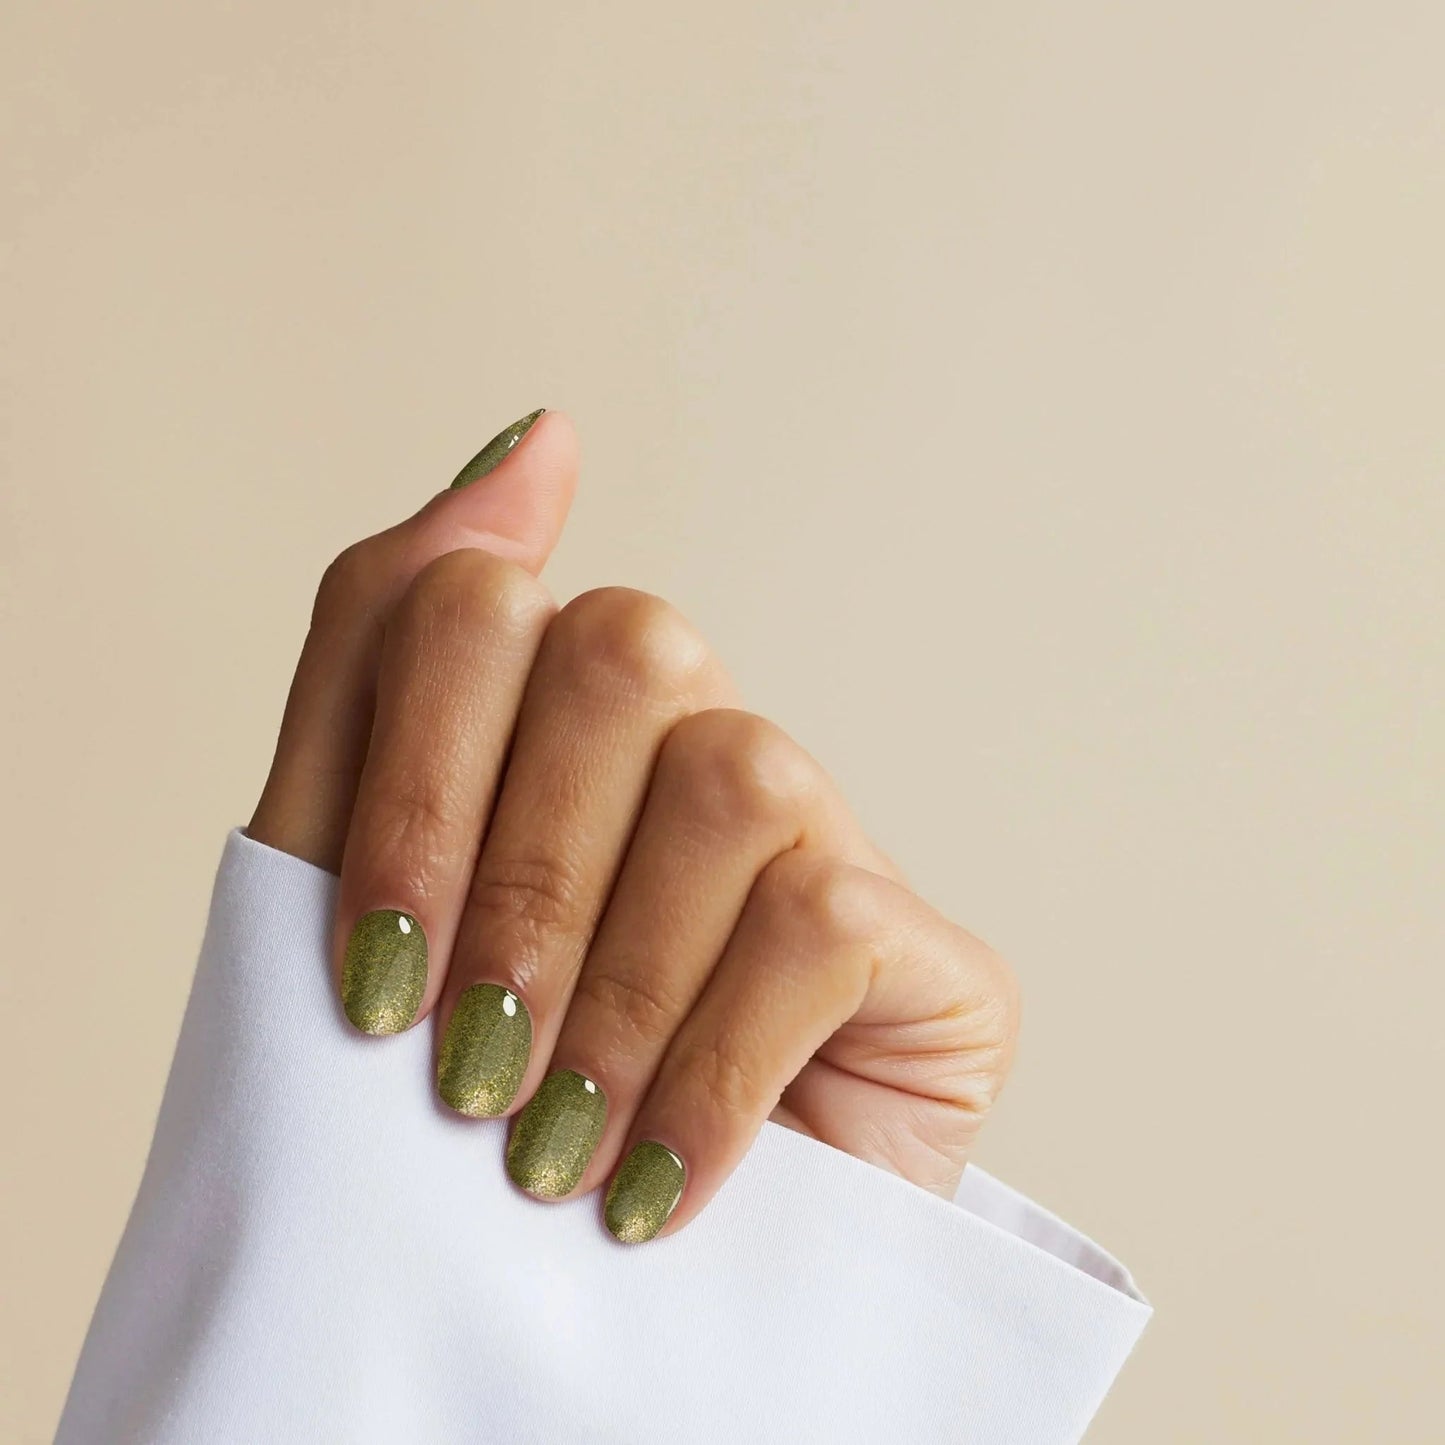 Dubai-Style - Gel Polish - 14 Day Manicure - On Hand 